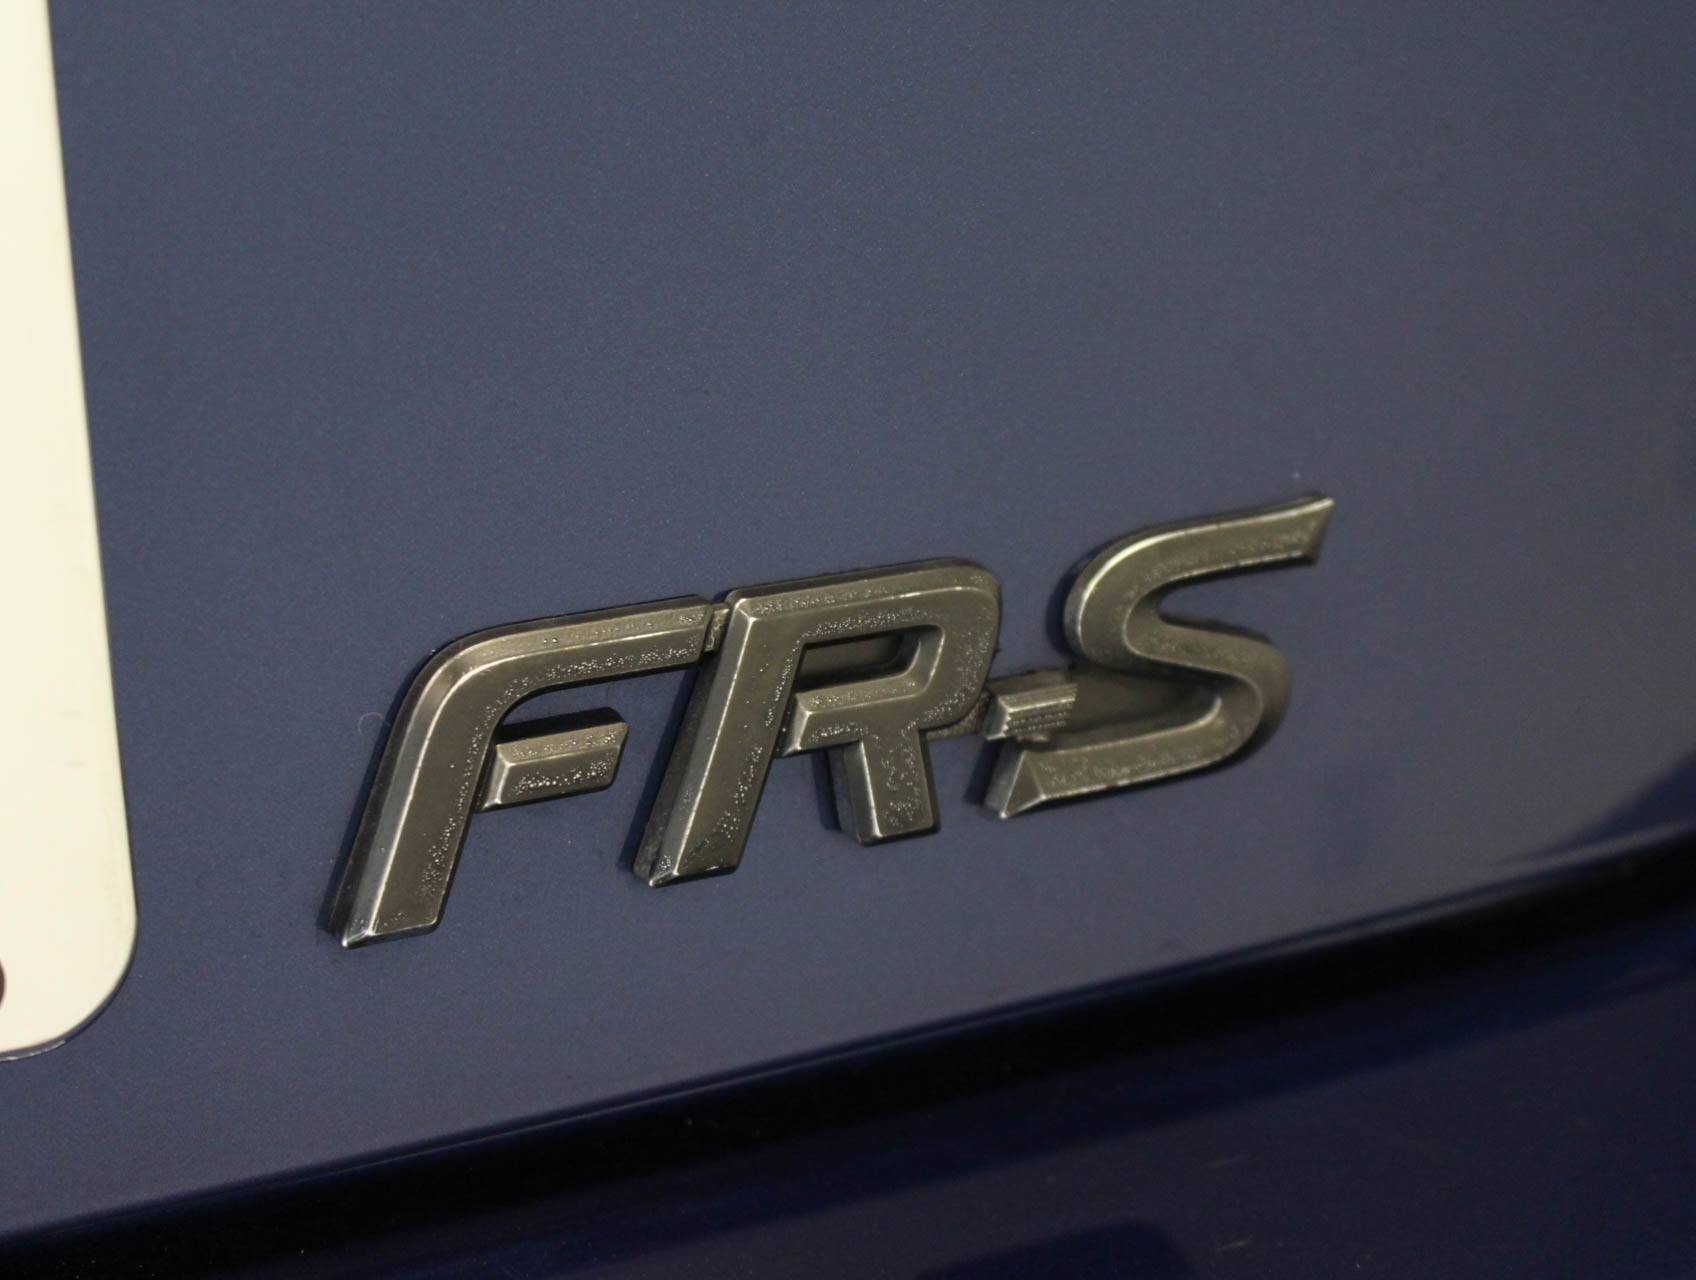 Florida Fine Cars - Used SCION FR S 2015 MARGATE 